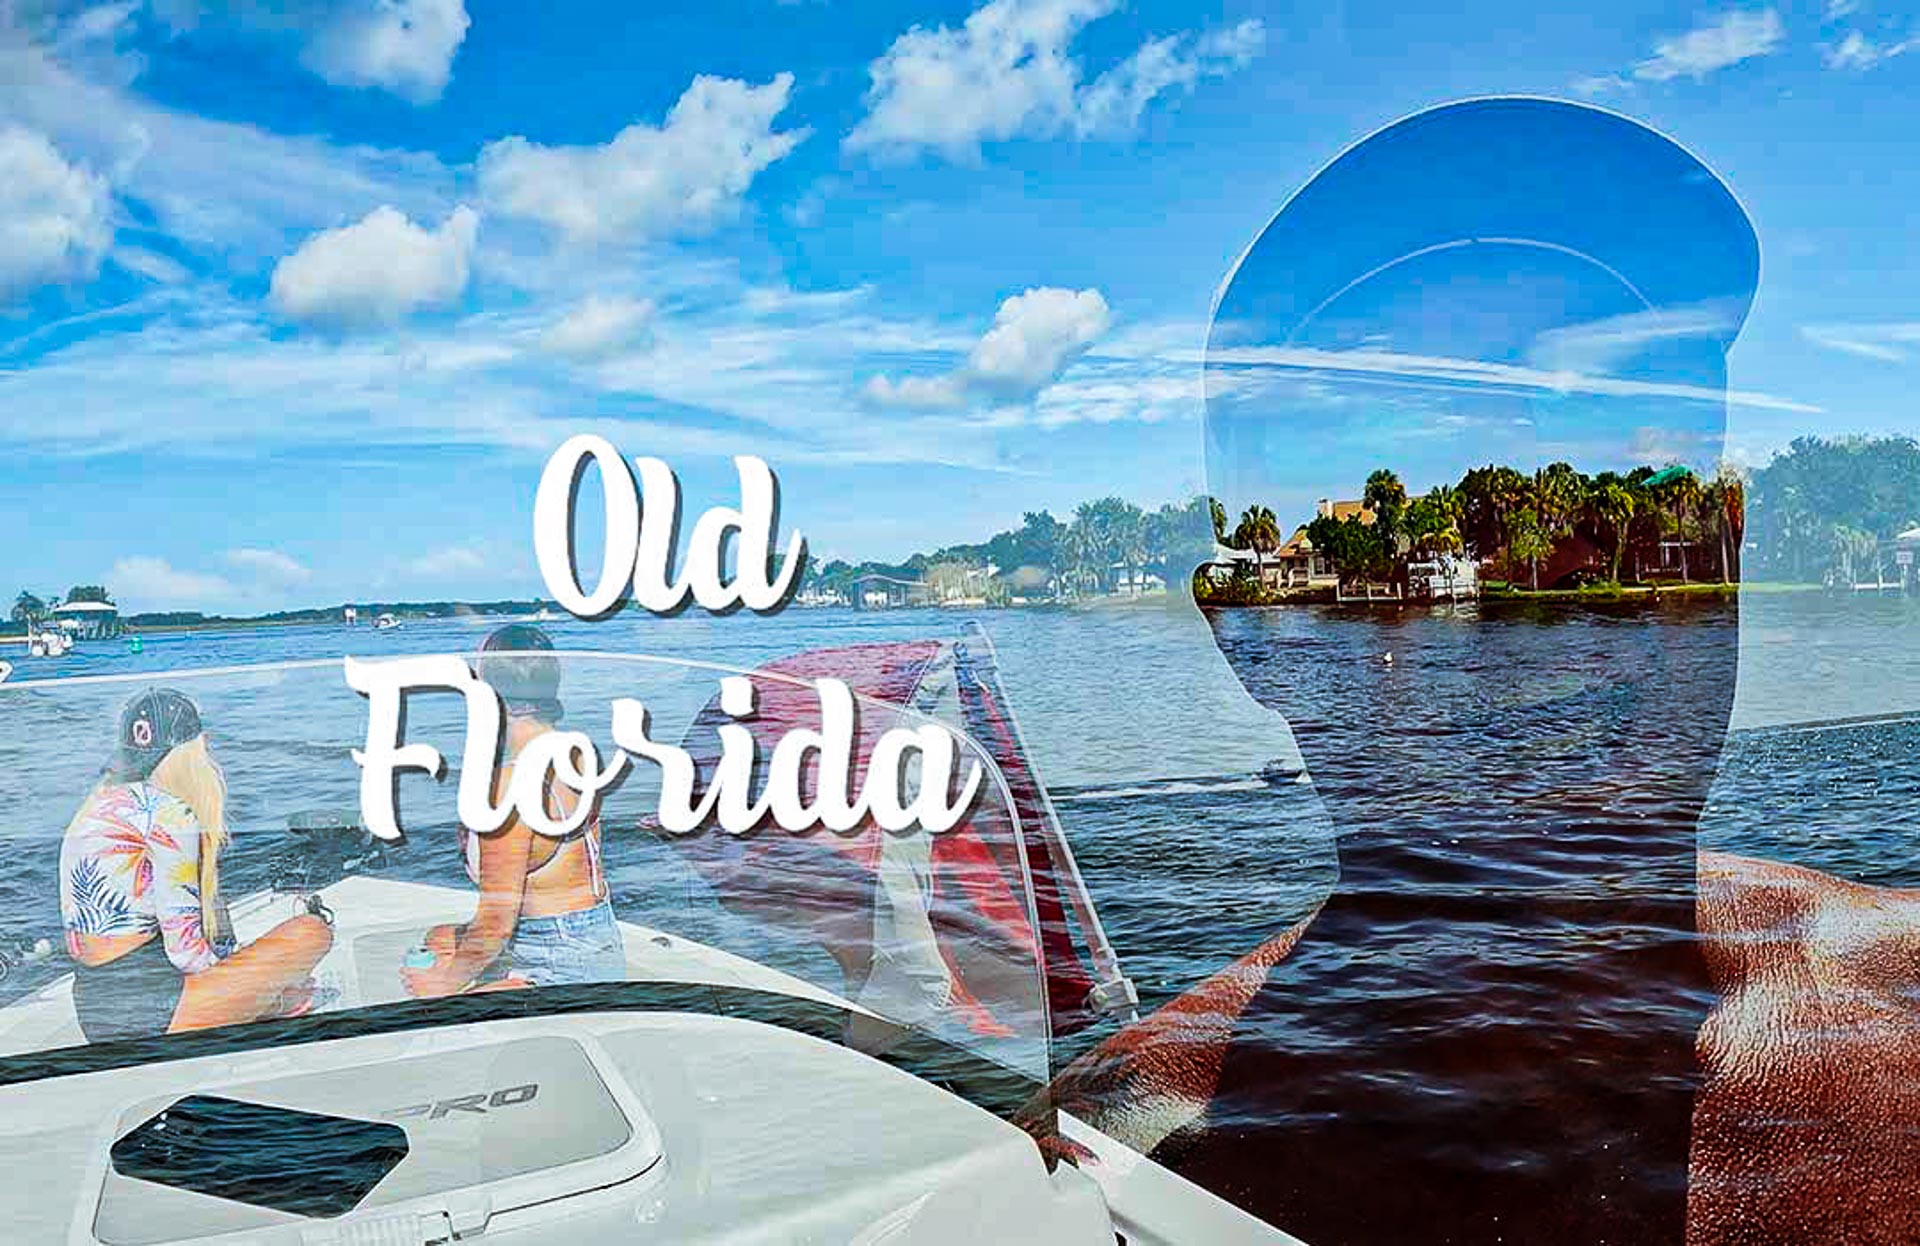 Old Florida - Homosassa & Crystal River